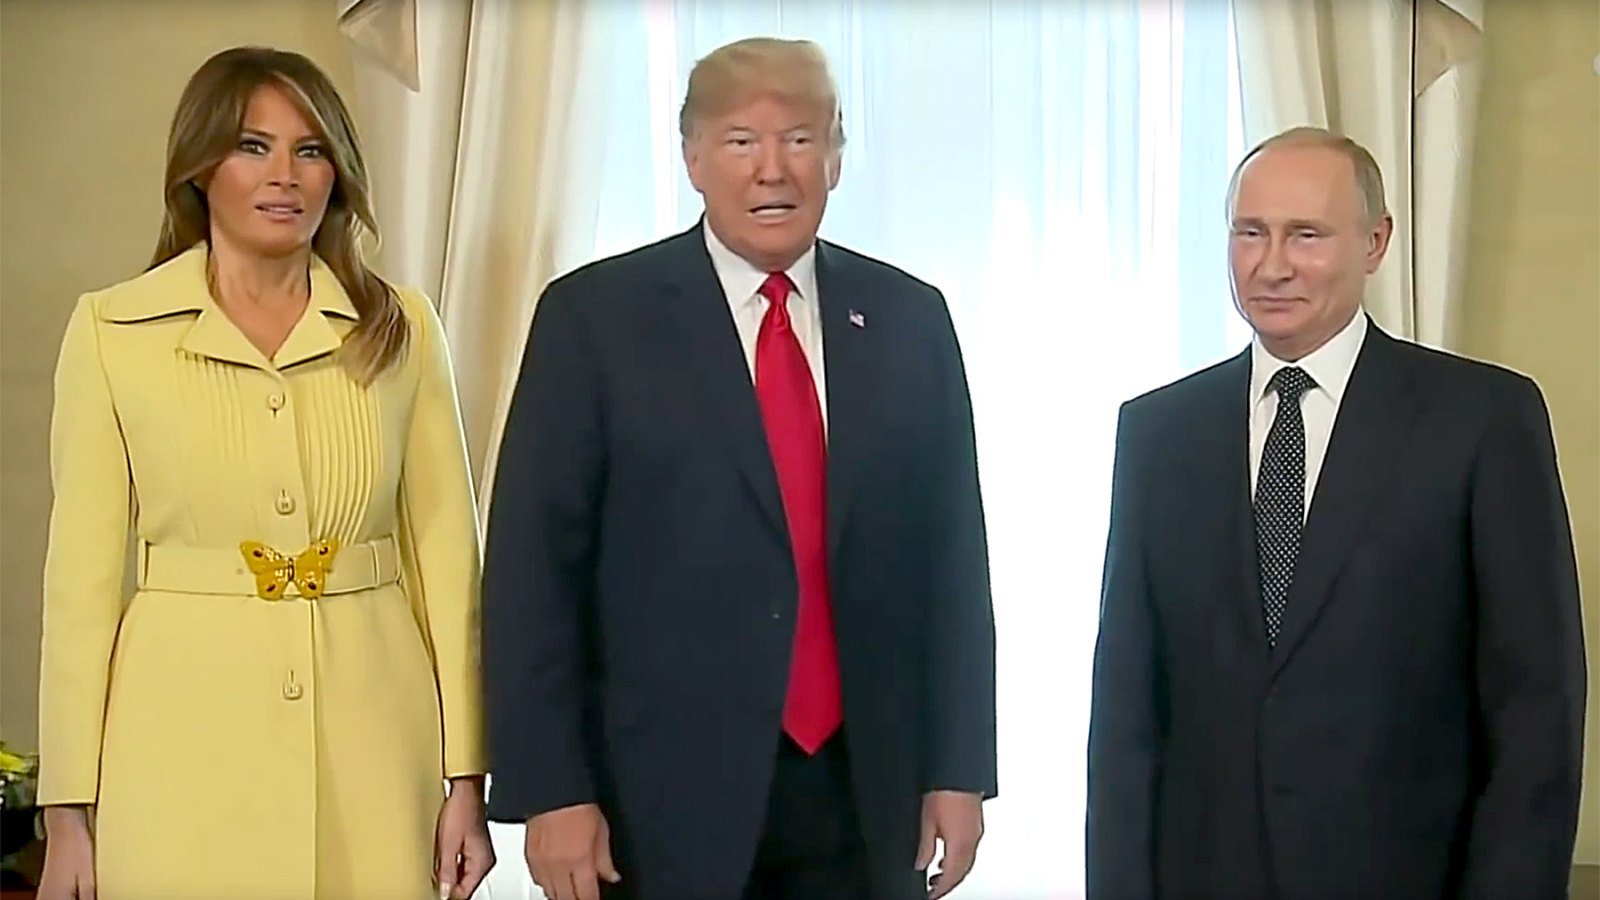 Melania Trump, Donald Trump, and Vladimir Putin